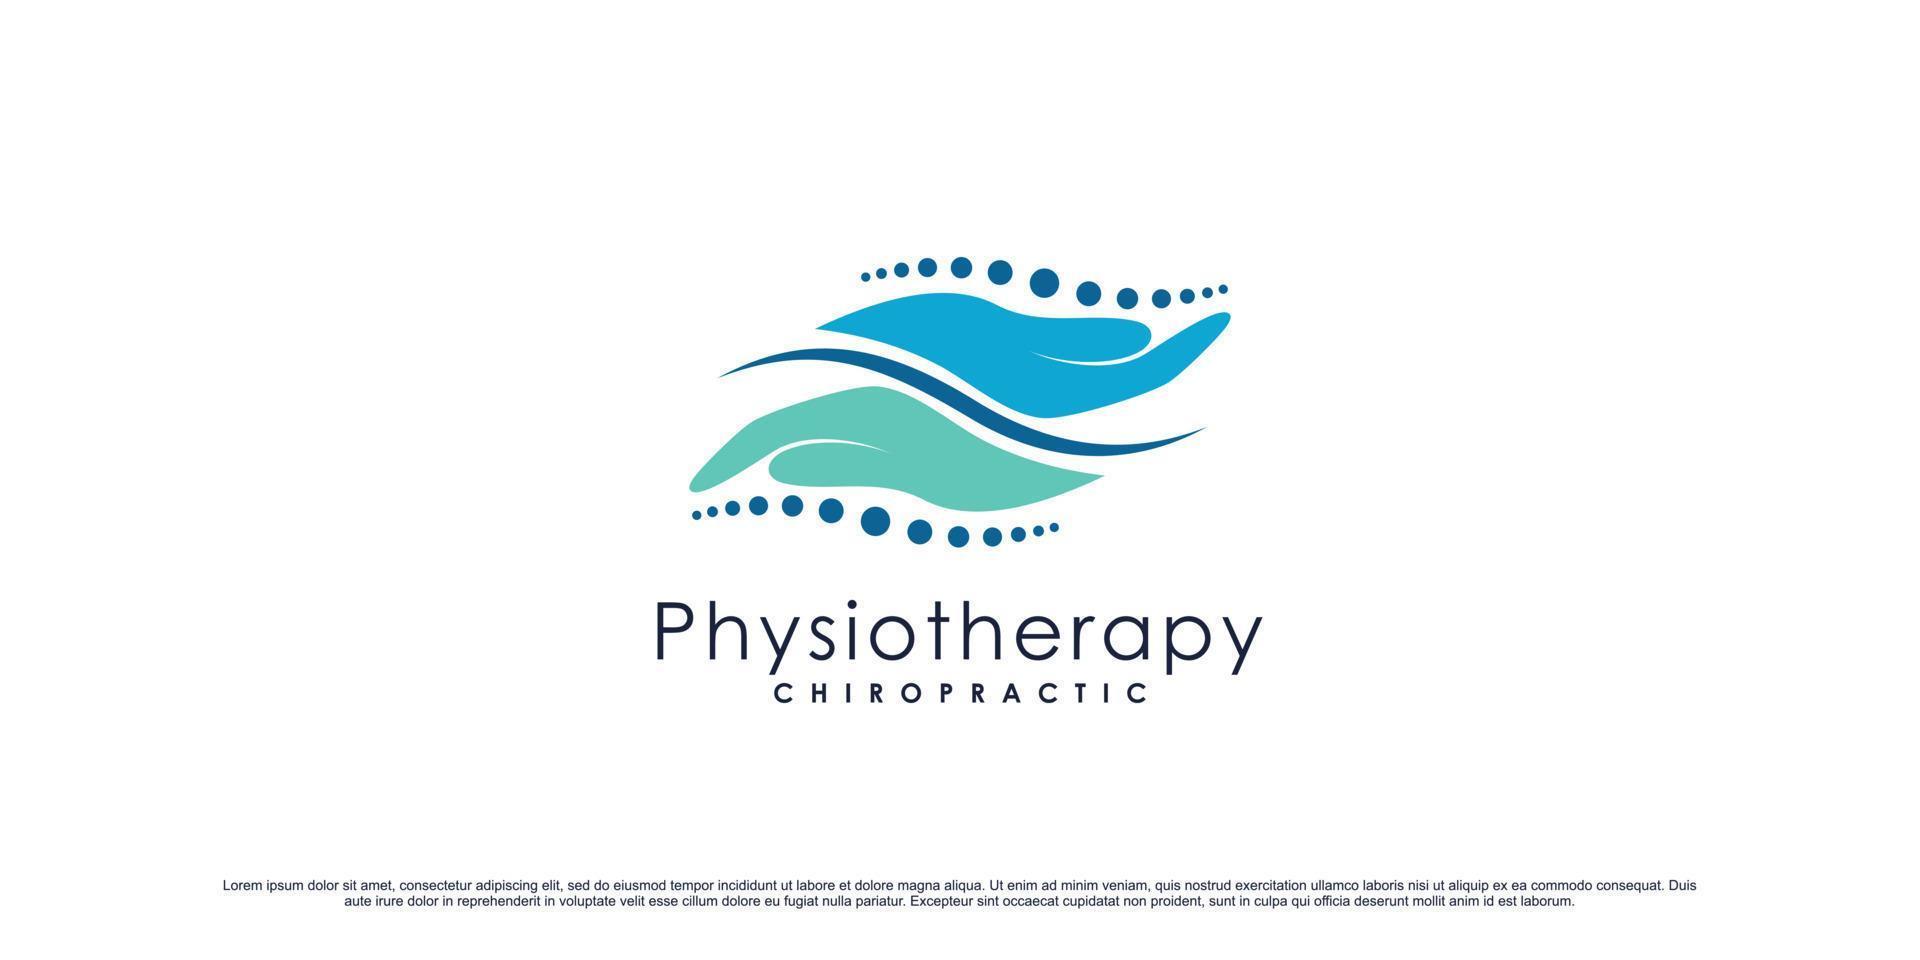 diseño de logotipo de fisioterapia para atención médica y médica con vector premium de concepto moderno creativo